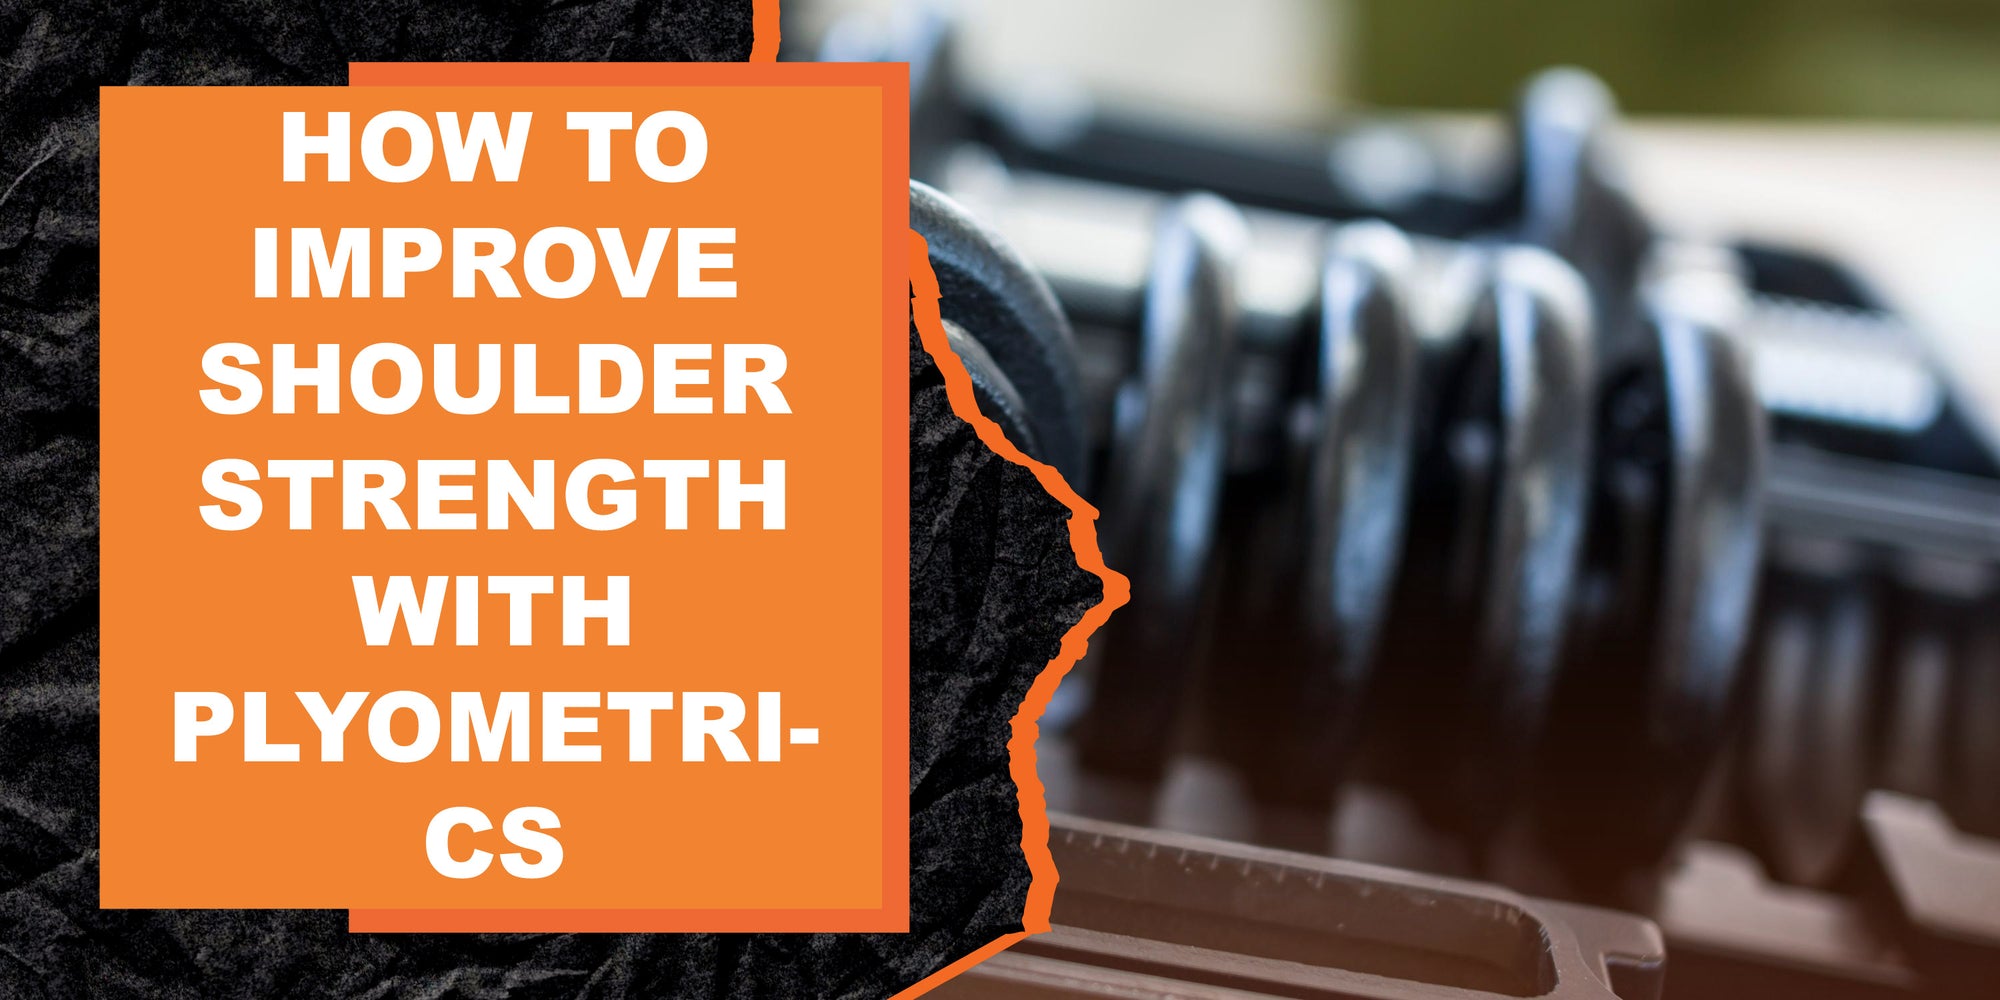 How to Improve Shoulder Strength with Plyometrics